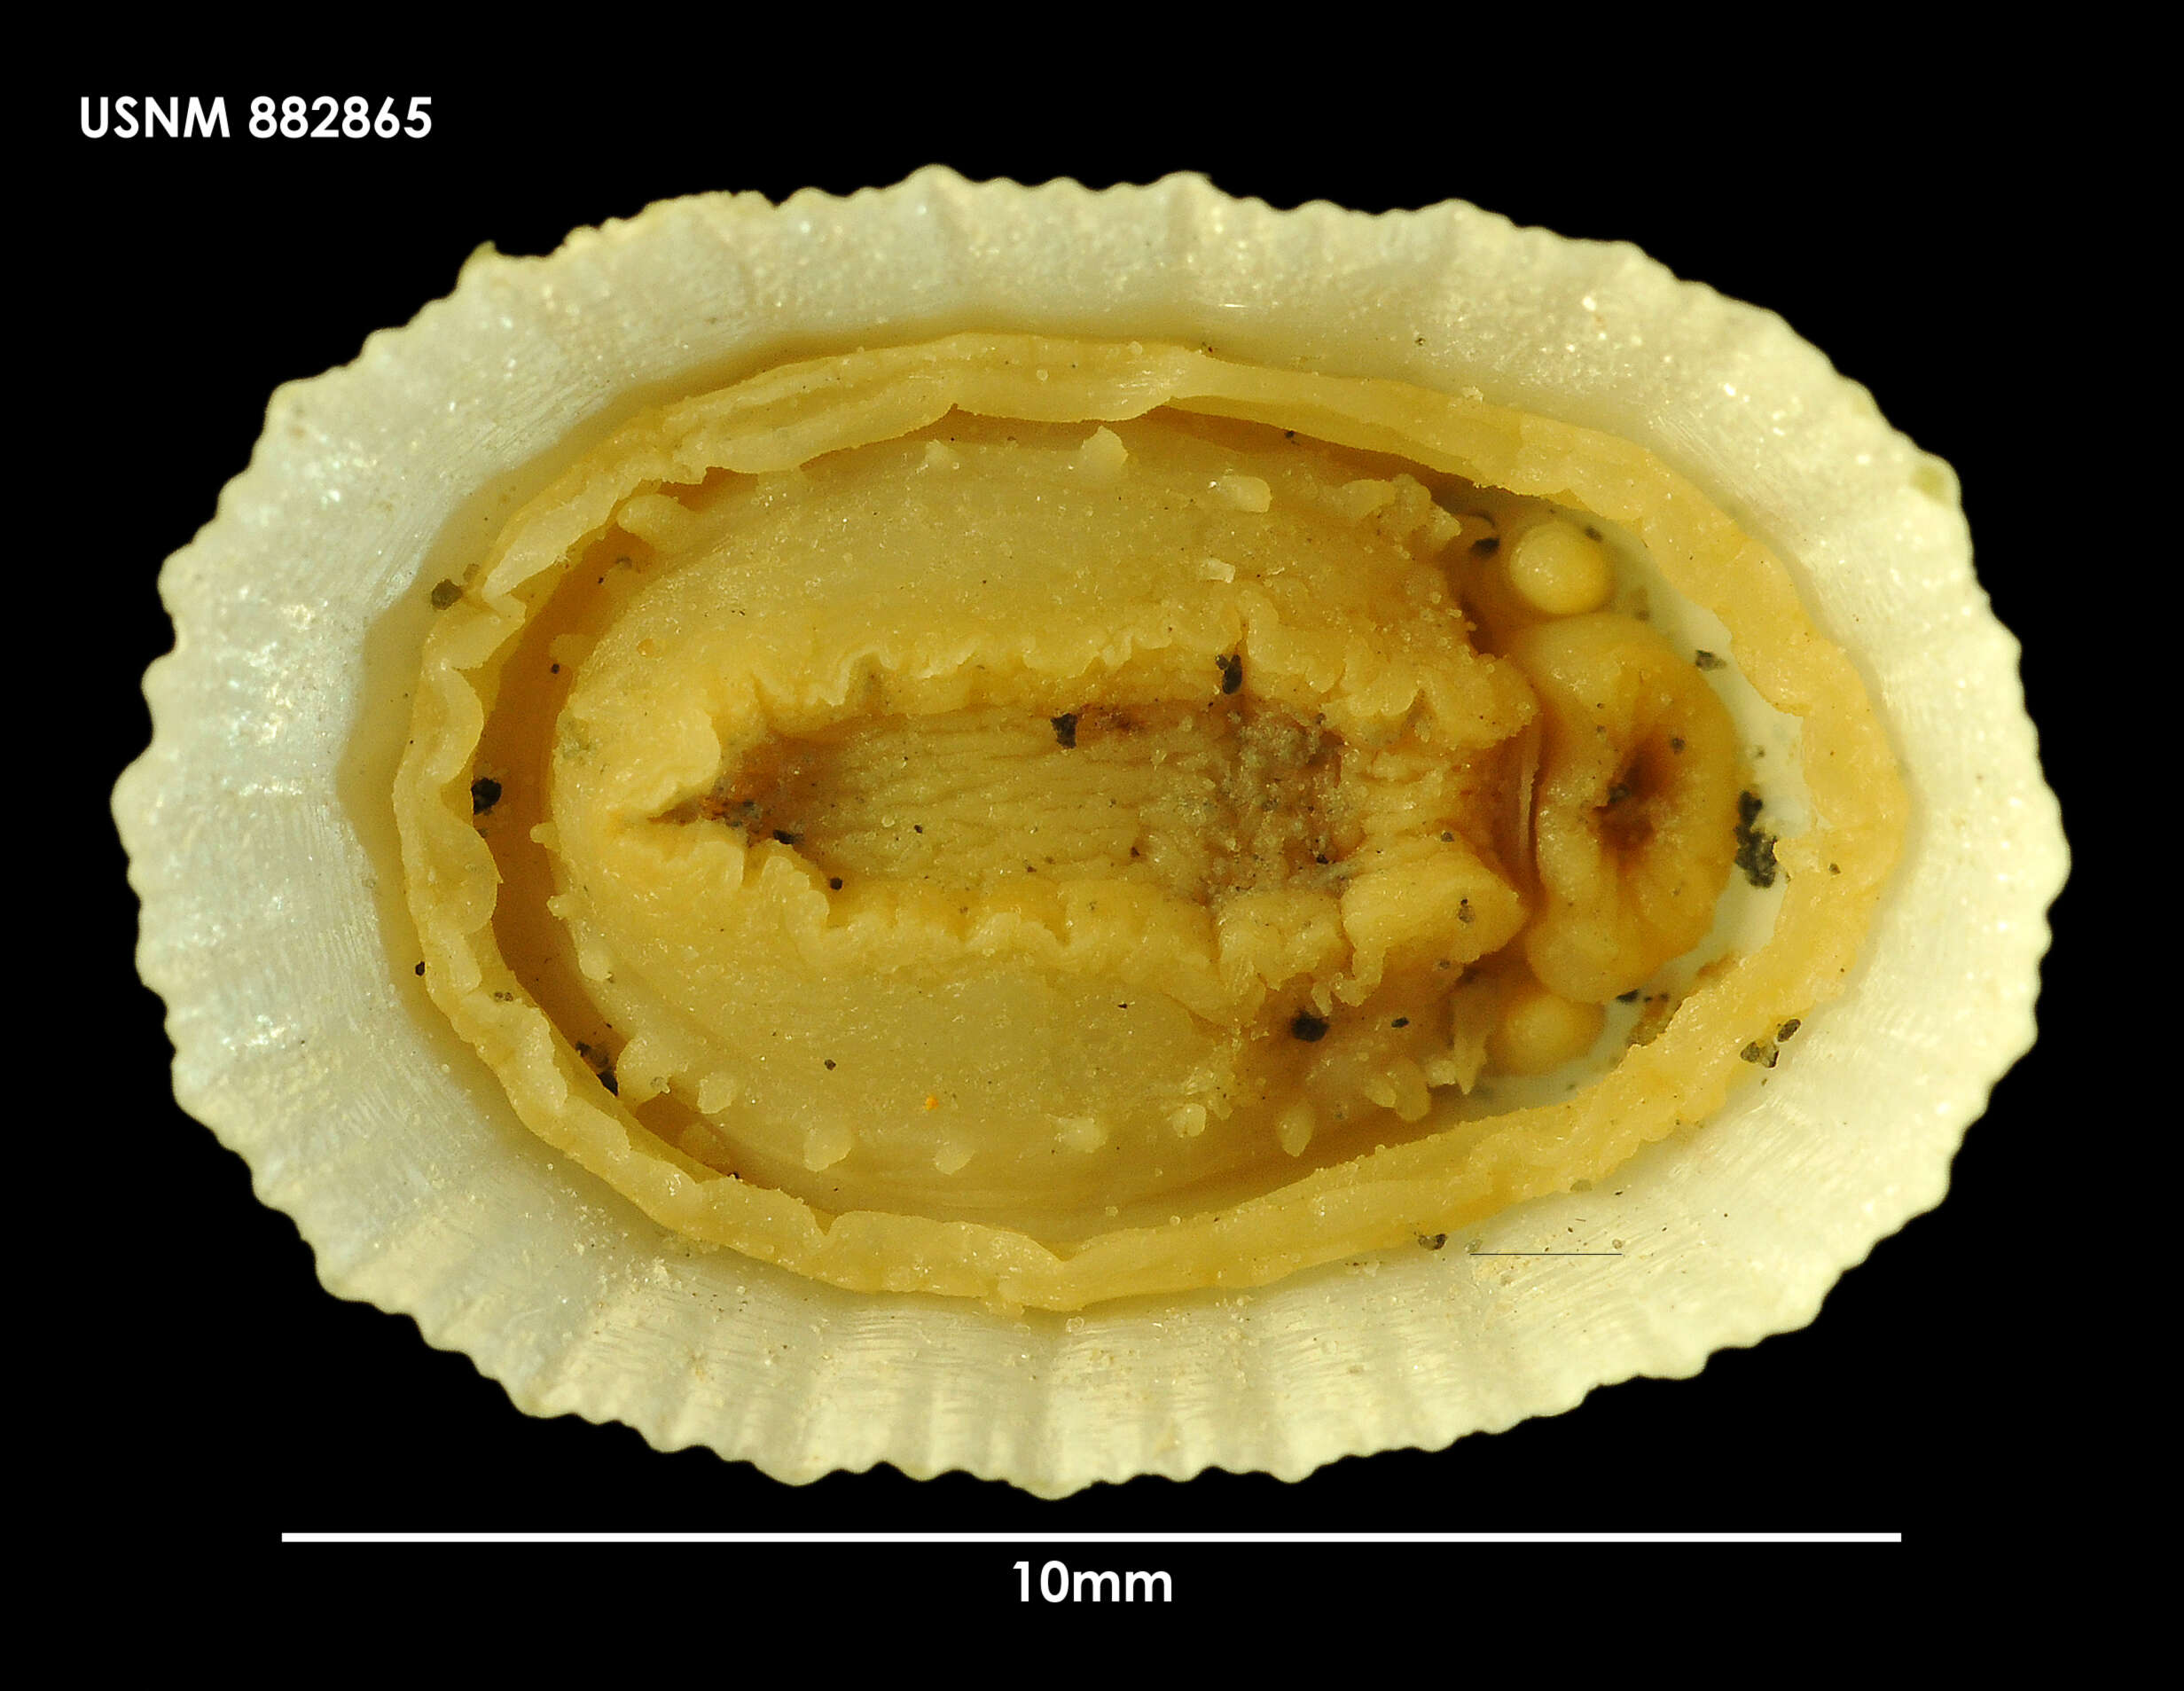 Image of punctured capshell